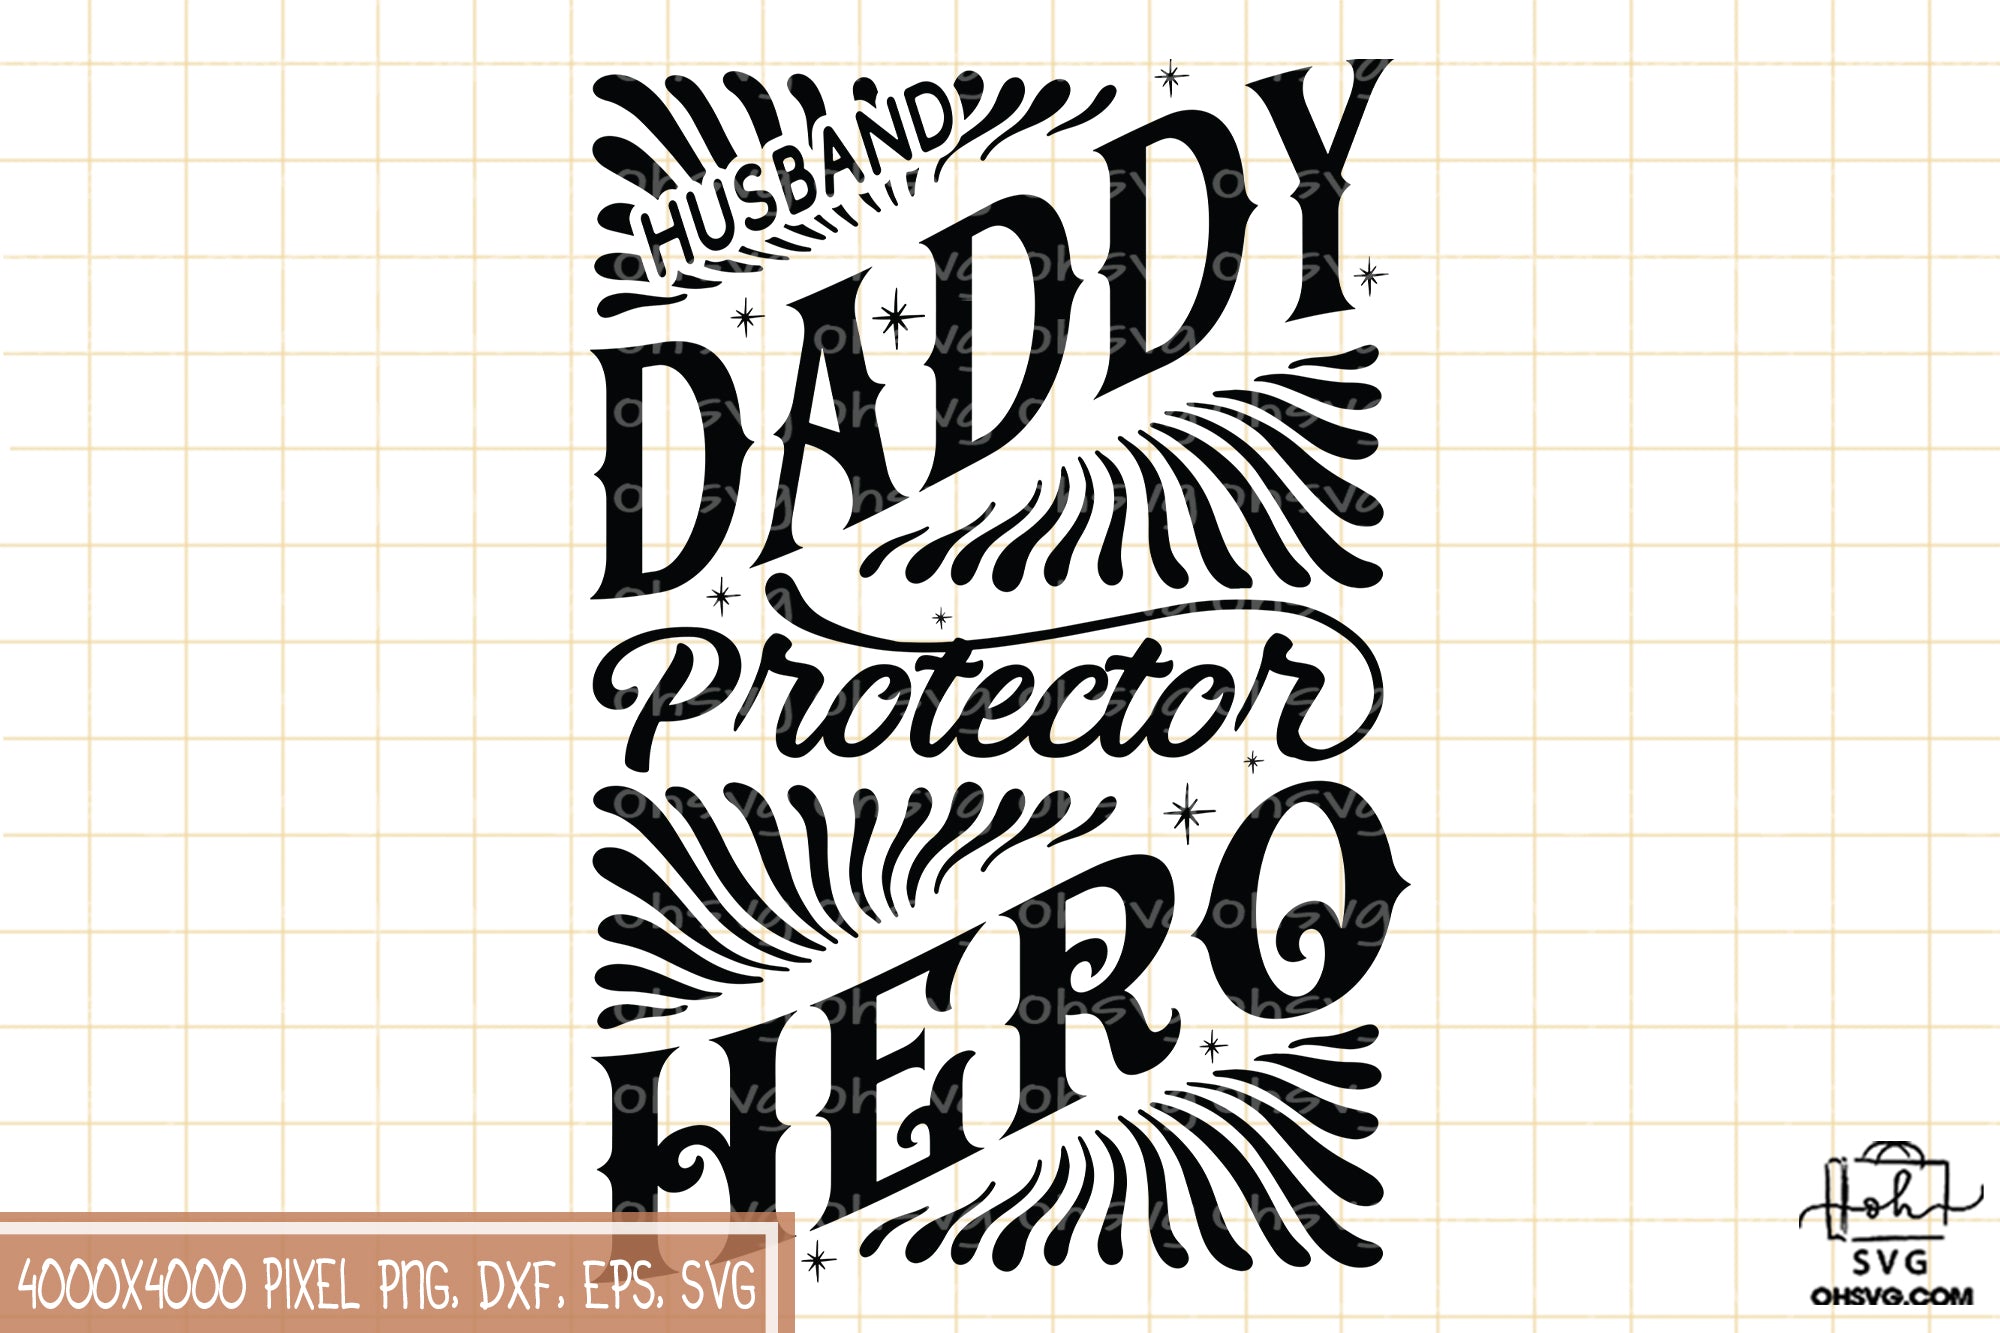 Husband Daddy Protector Hero SVG, Stepdad SVG, Father Day SVG